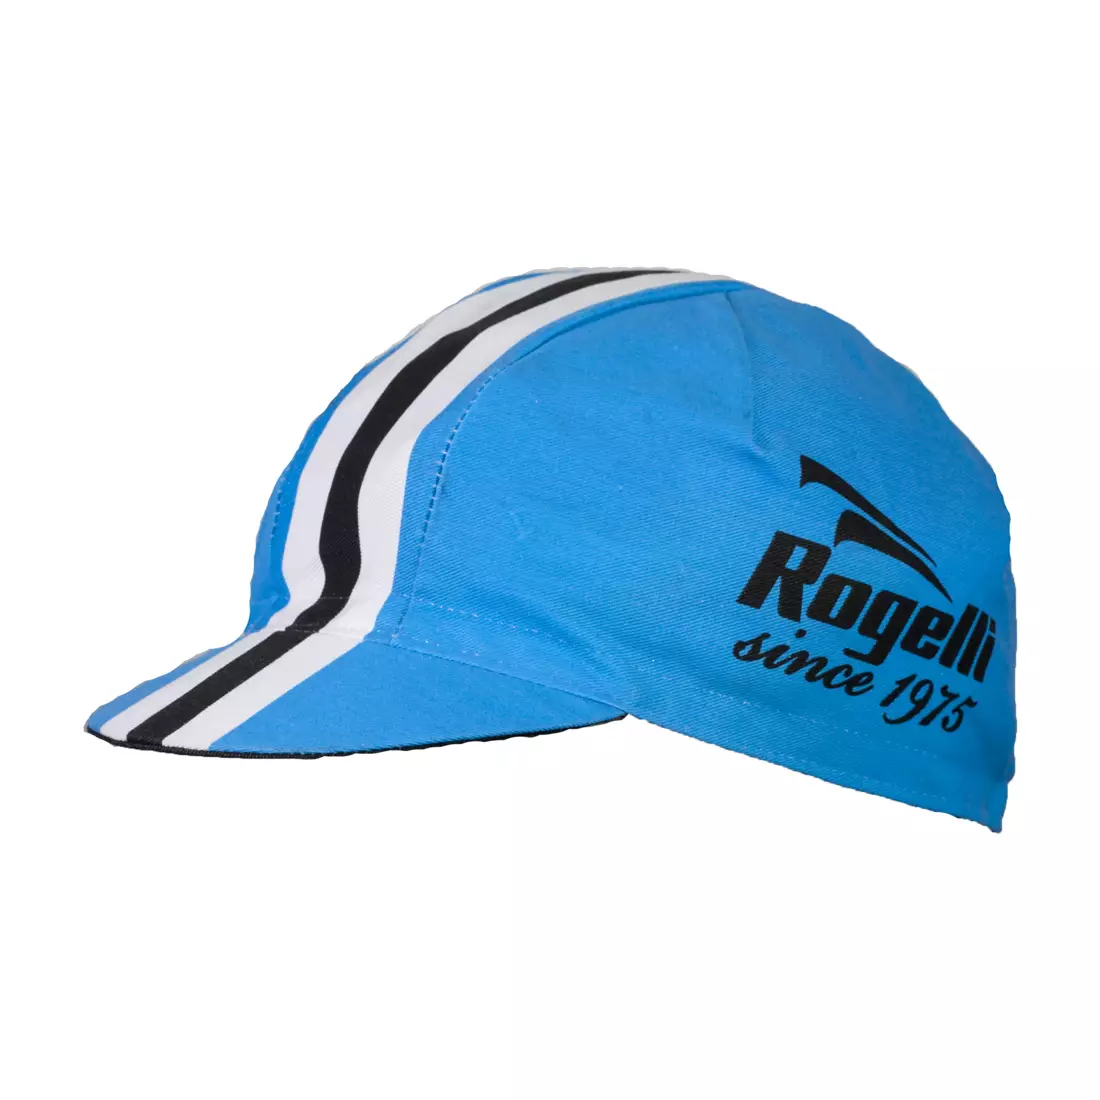 ROGELLI 009.957 SS18 BIKE - RETRO 1975 - blue cycling cap